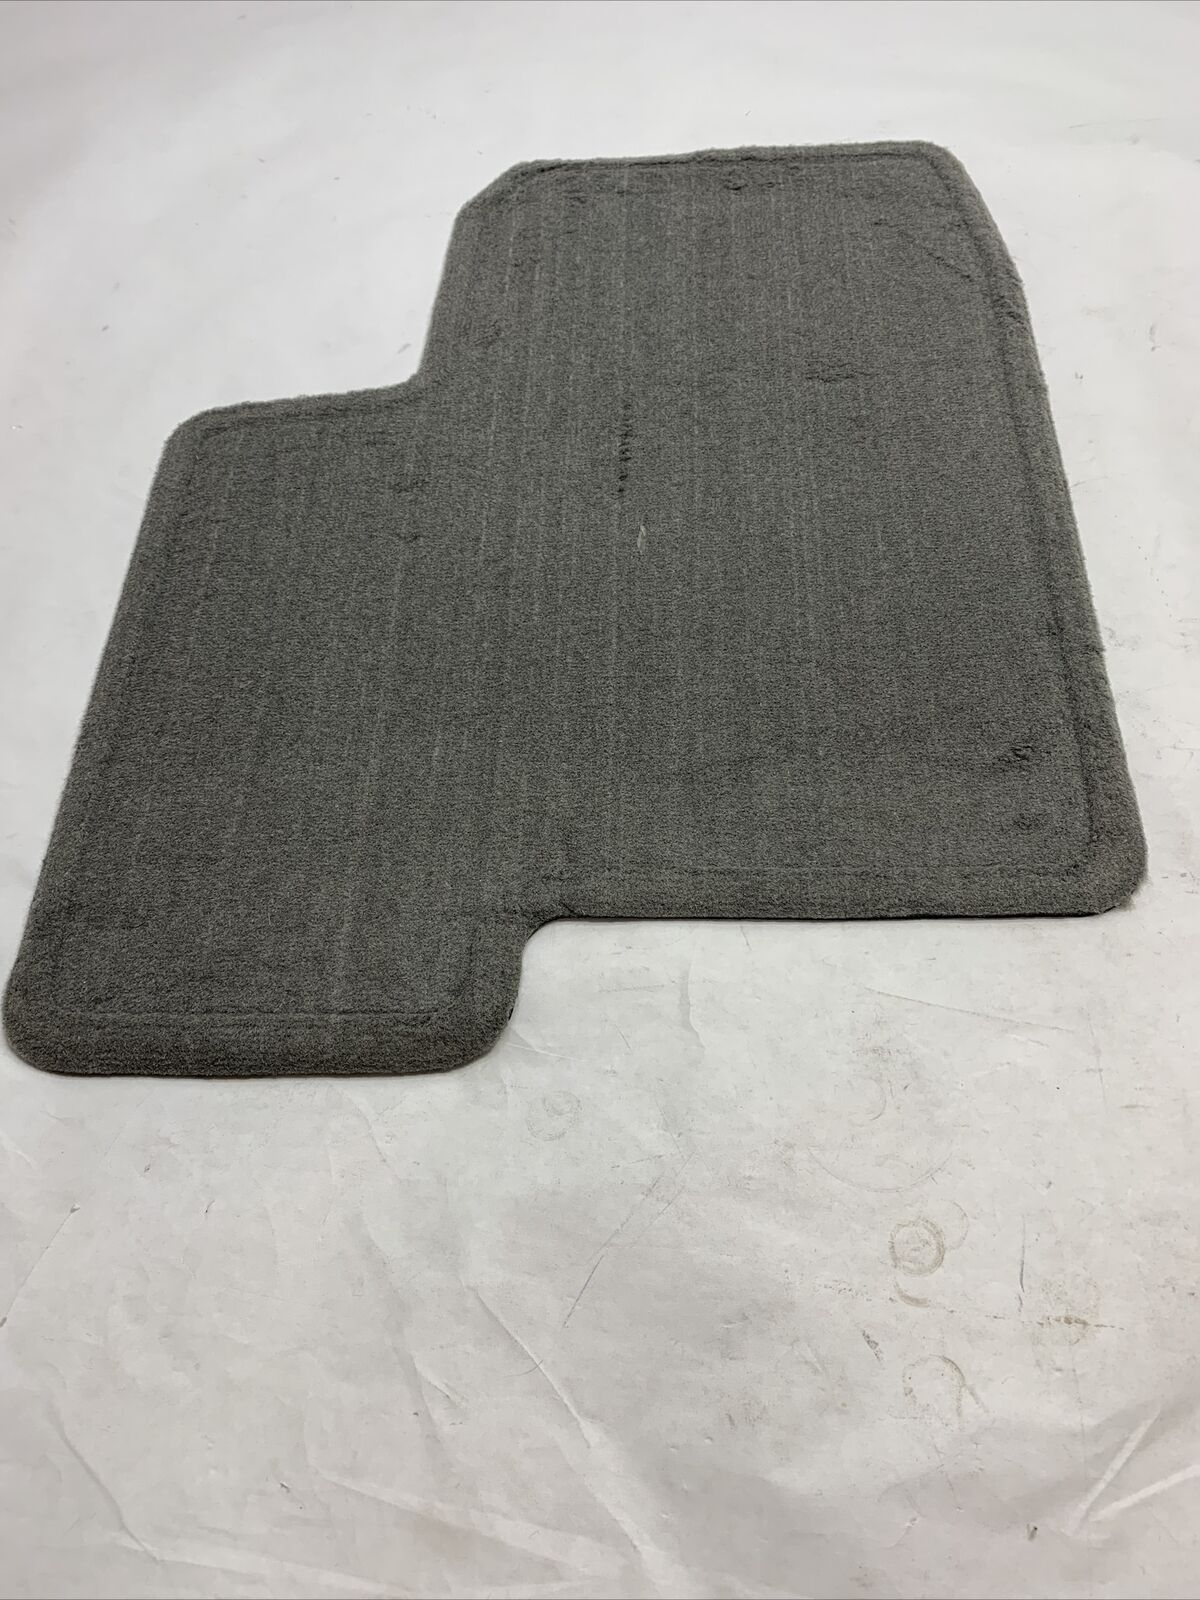 New OEM GM Chevy Venture Floor Mats Carpet 1997-2005  19121378